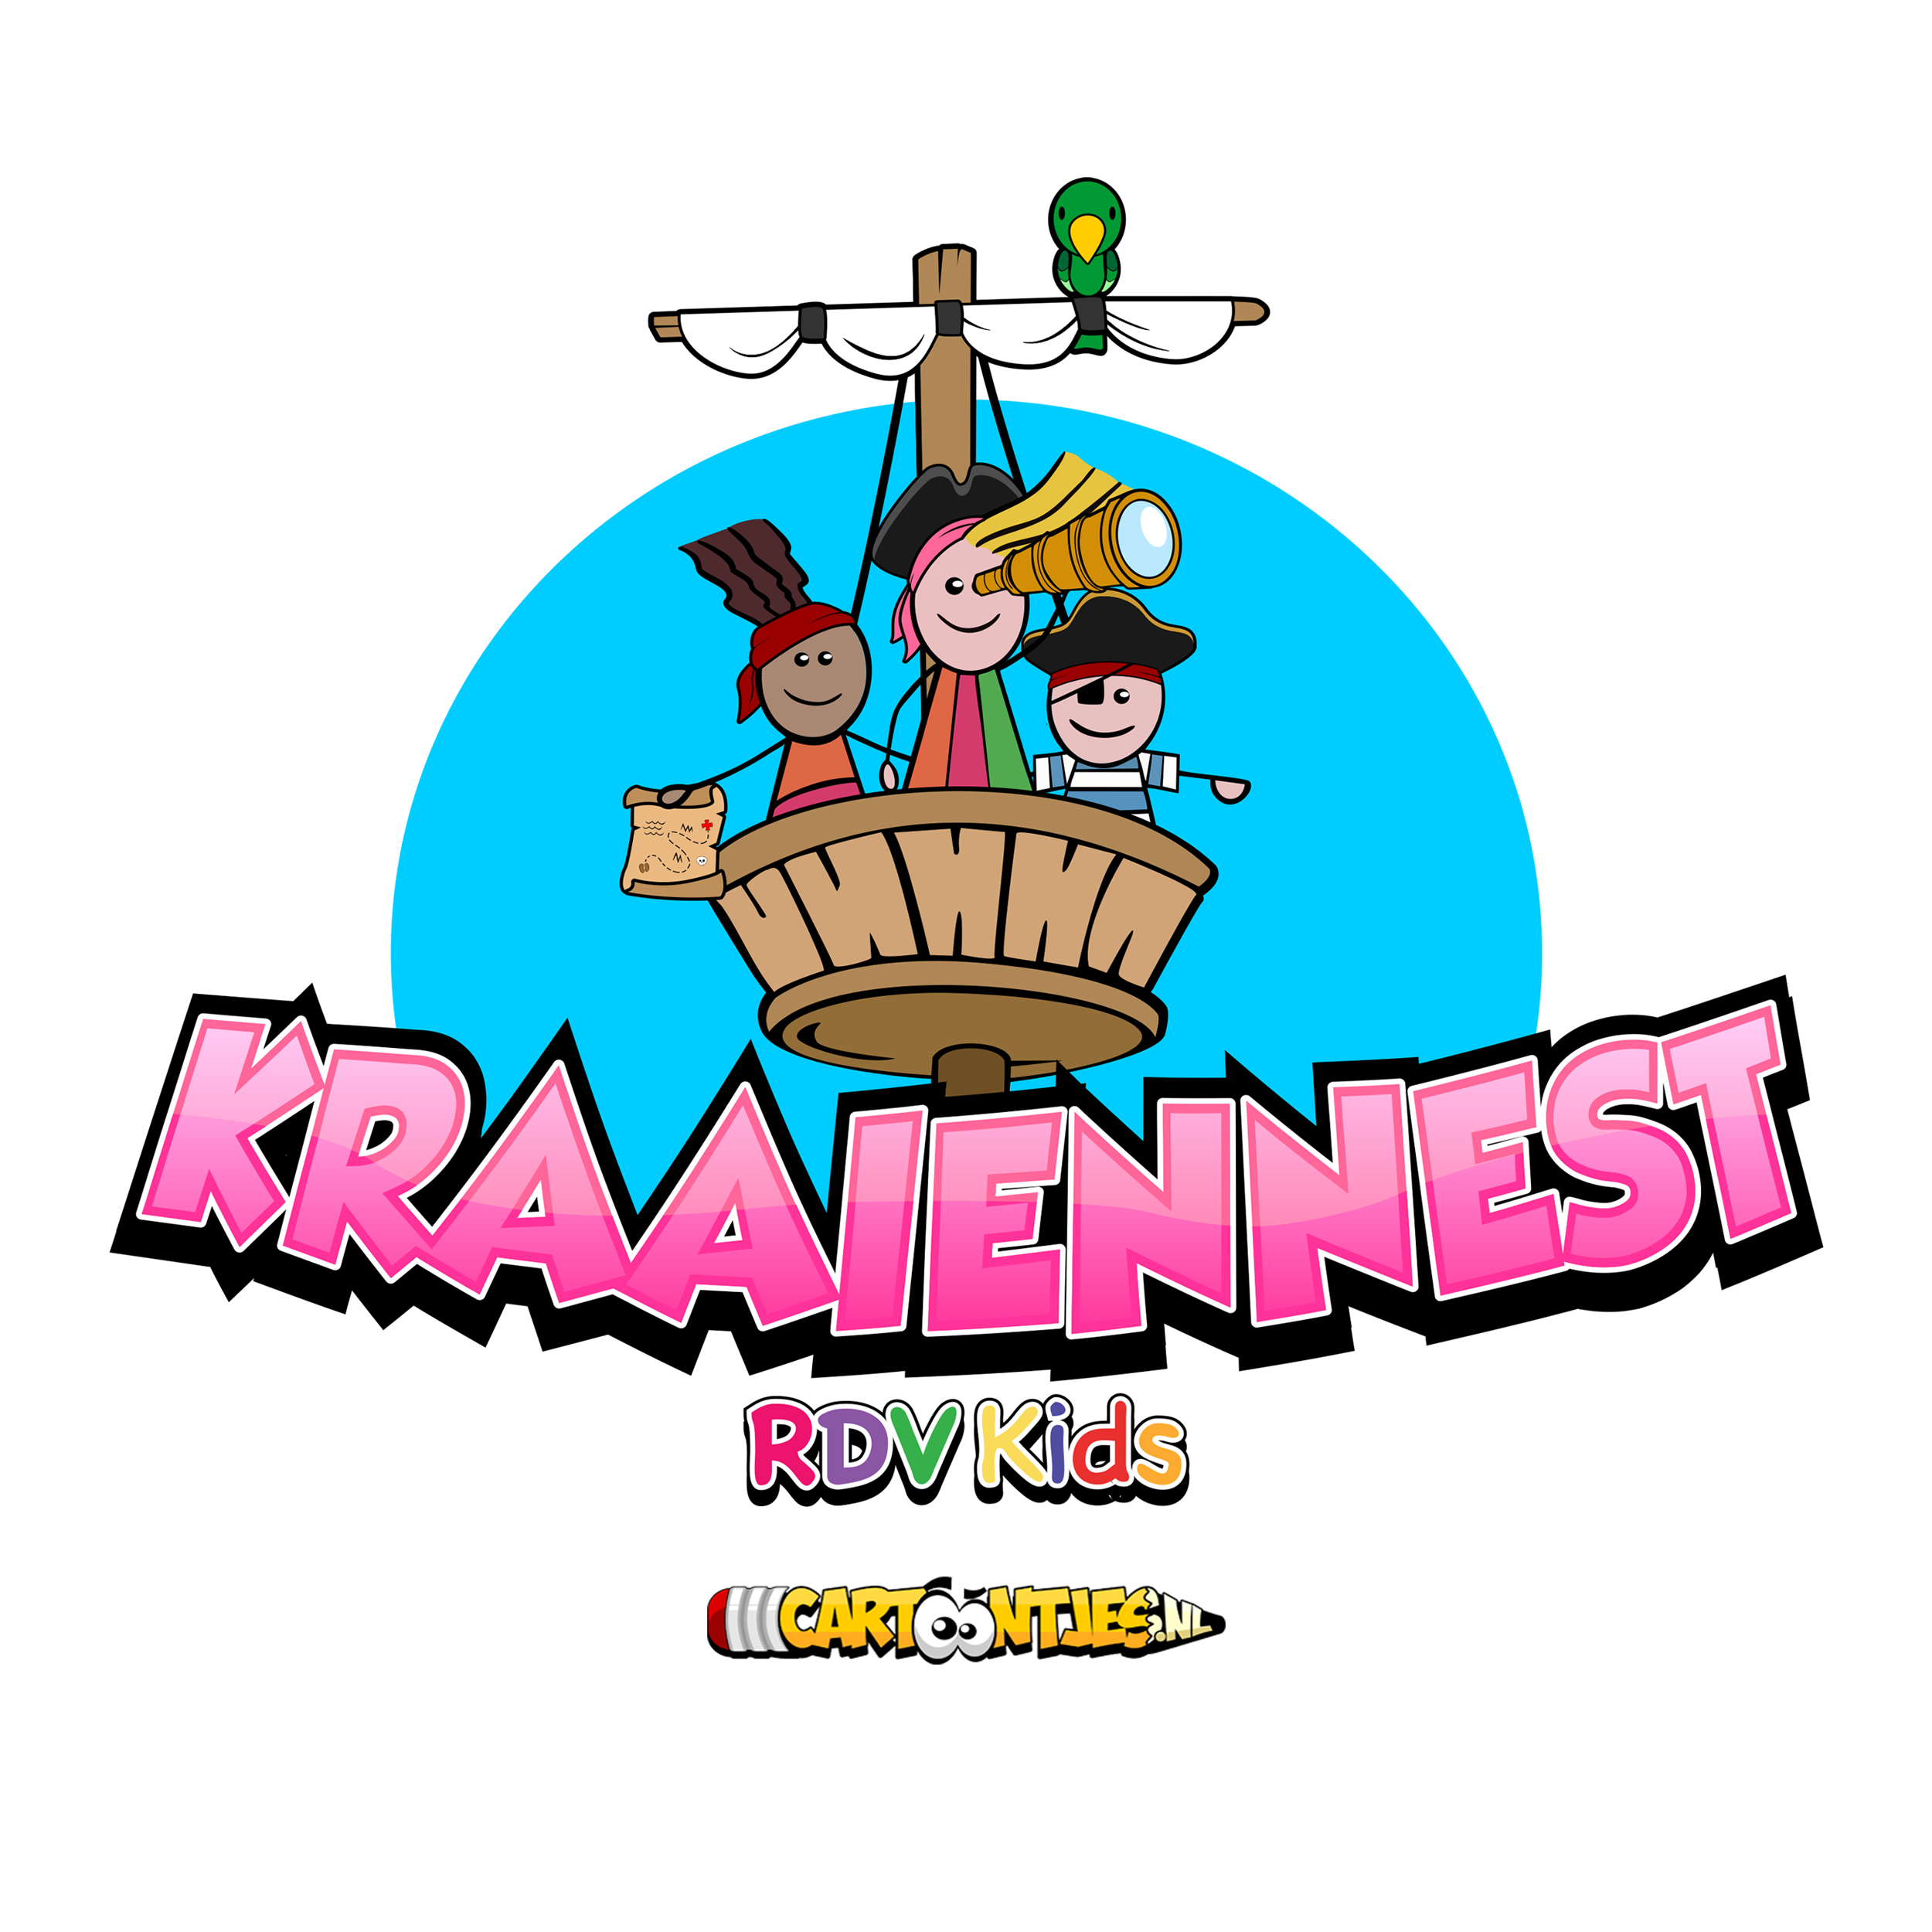 rdv-kids-kraaiennest-logo